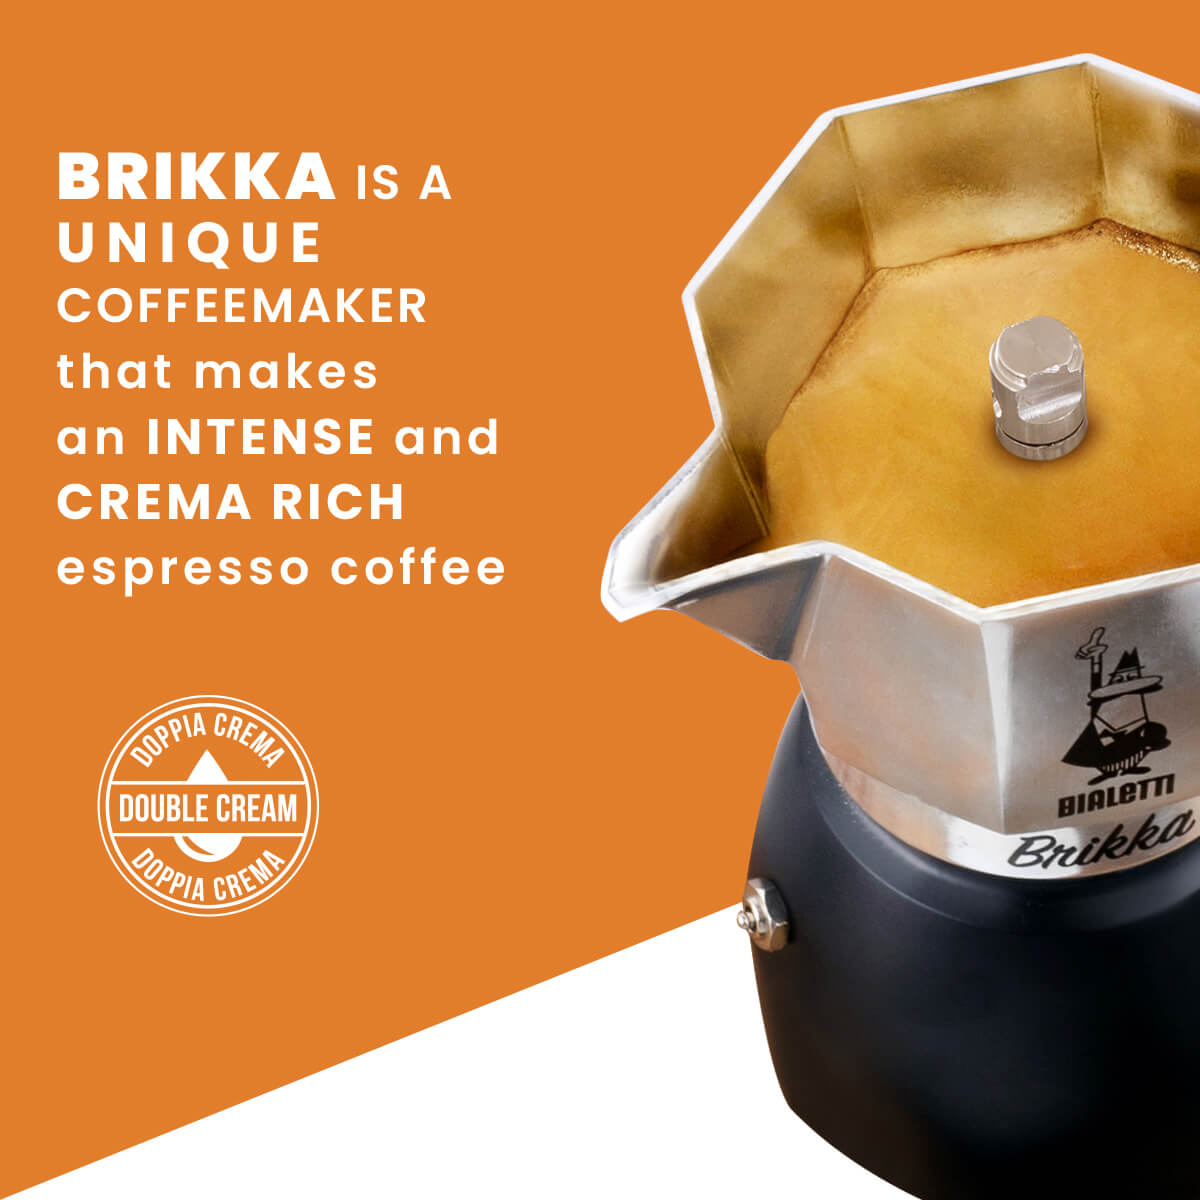 Brikka coffee pot for thick espresso crema